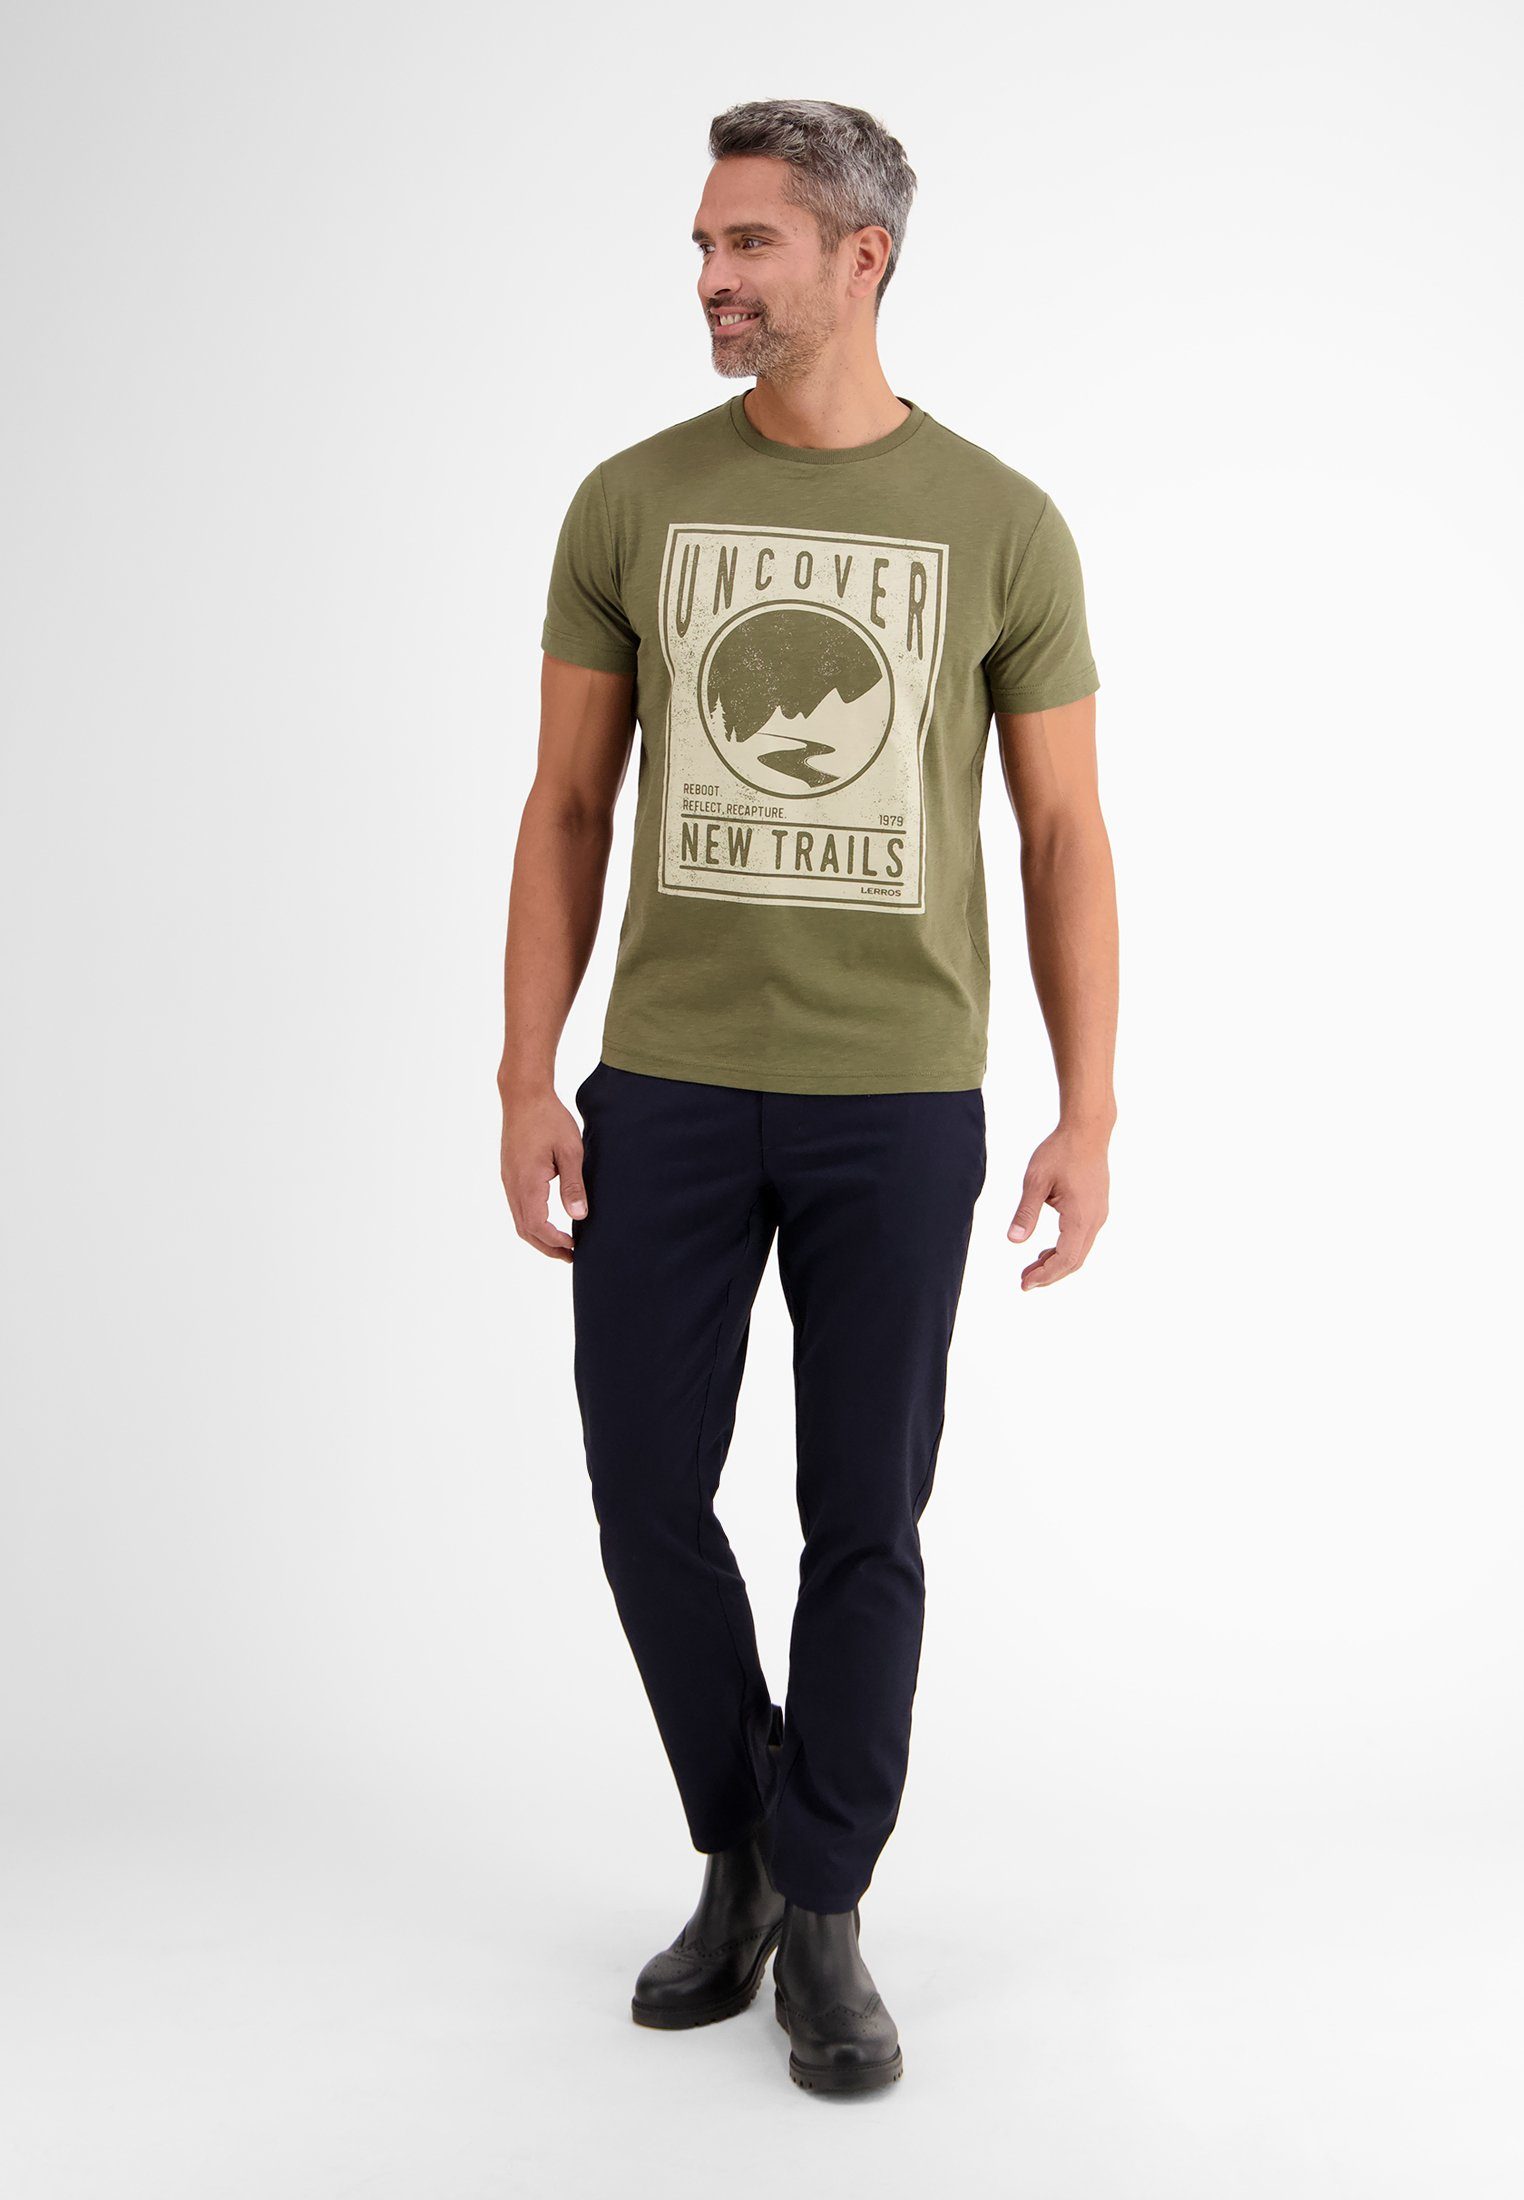 LERROS trails* Print-T-Shirt T-Shirt GREEN new LERROS OLIV *Uncover